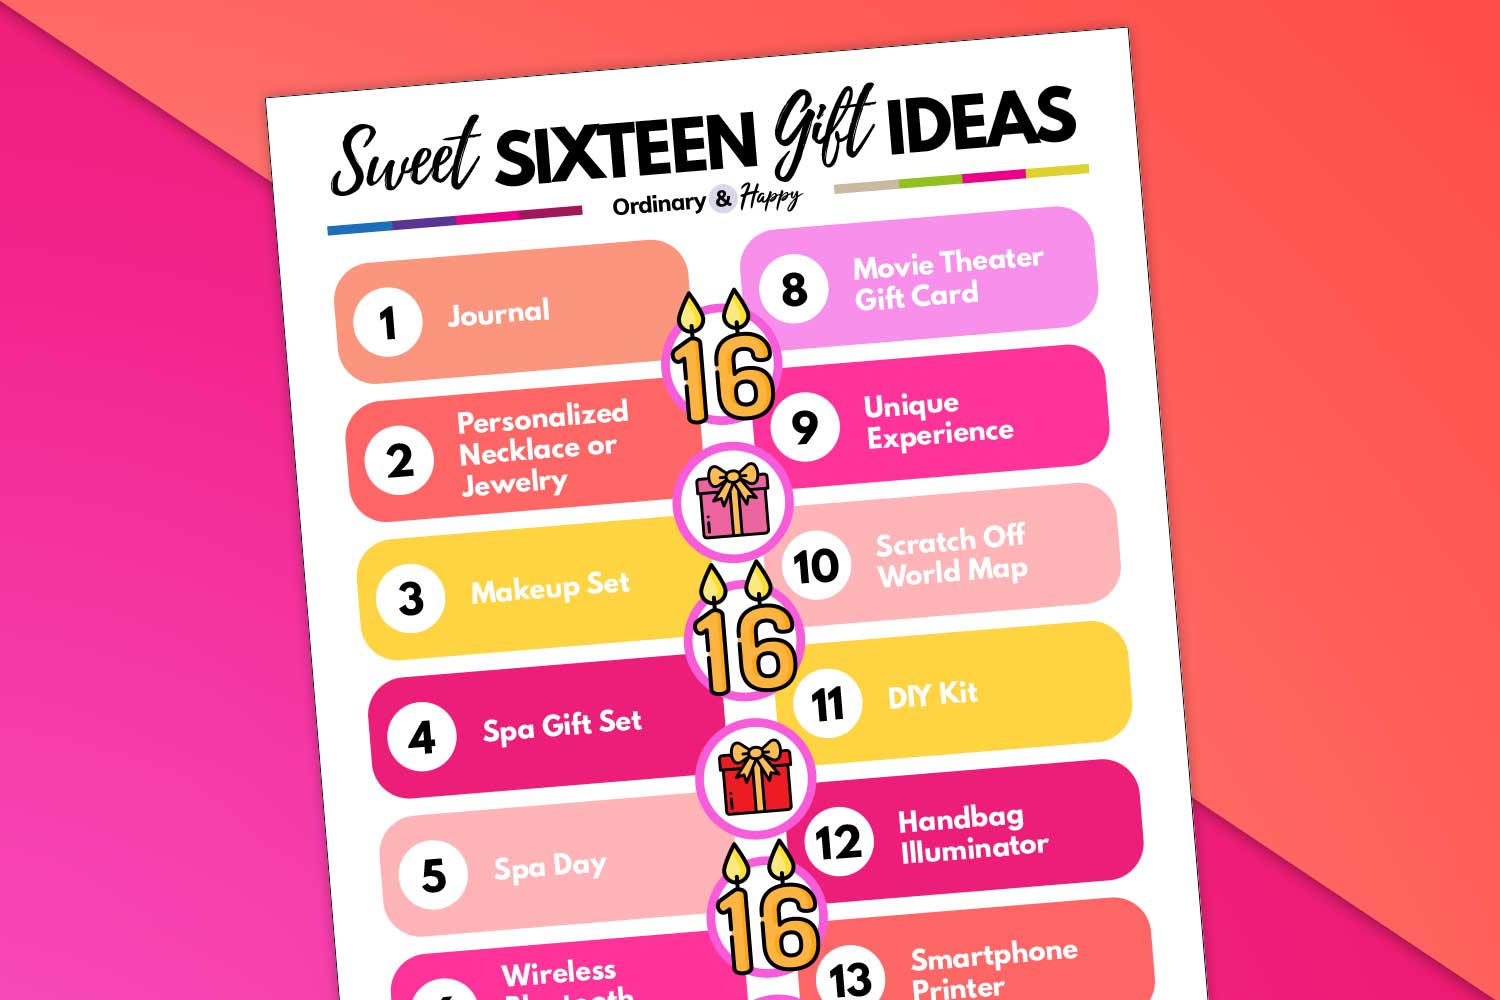 Sweet Sixteen Gift Ideas